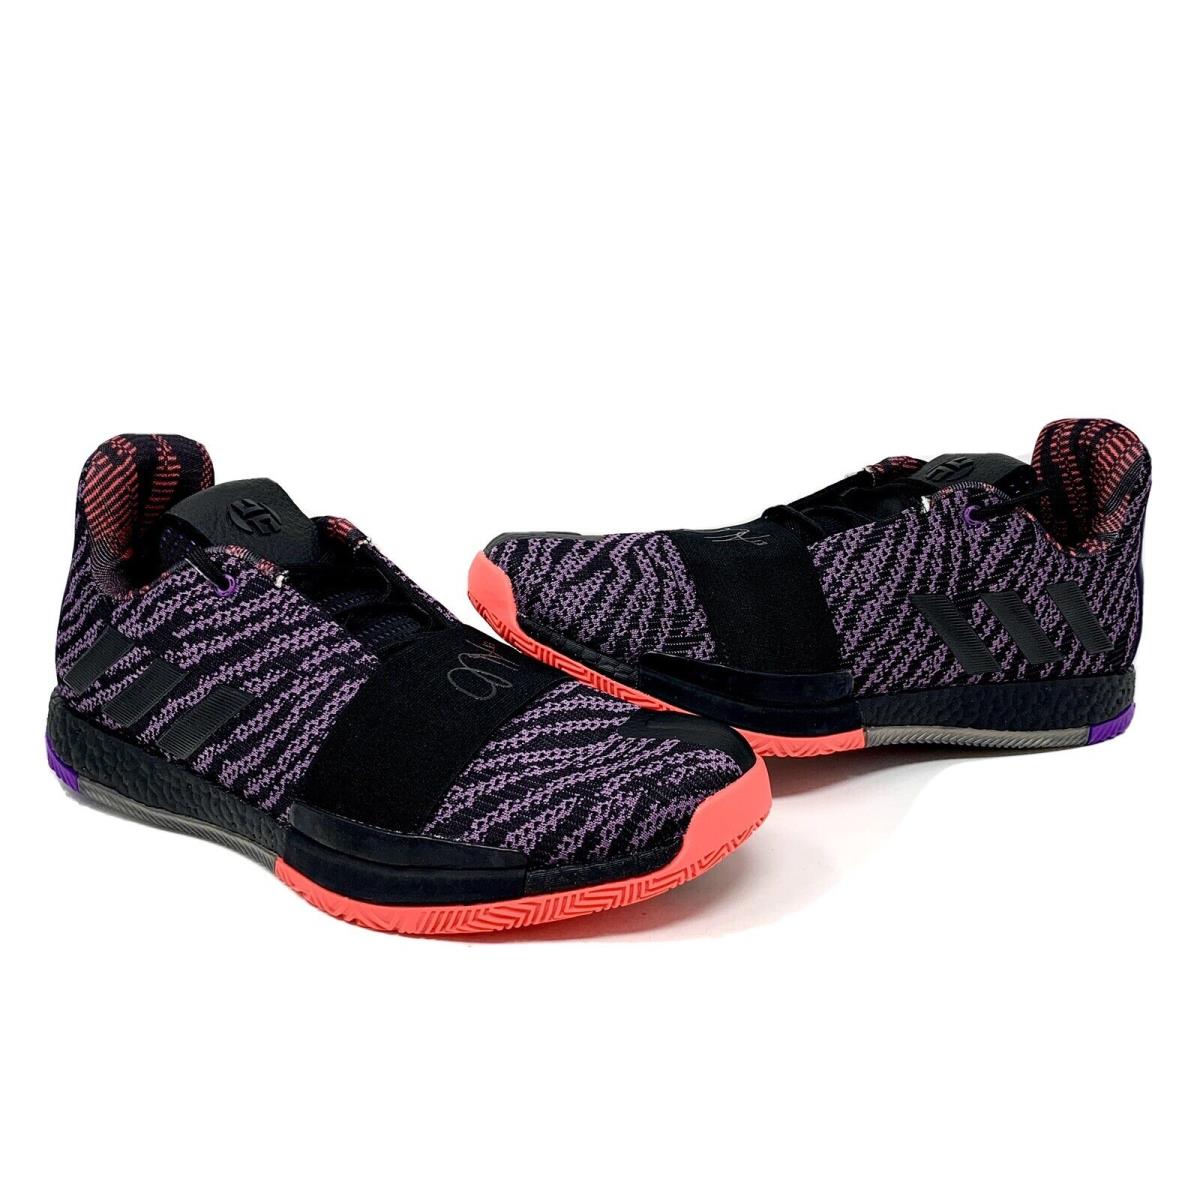 Adidas Harden Vol.3 `harlem Renaissance` Purple Basketball Shoes G26813 Sz 7.5